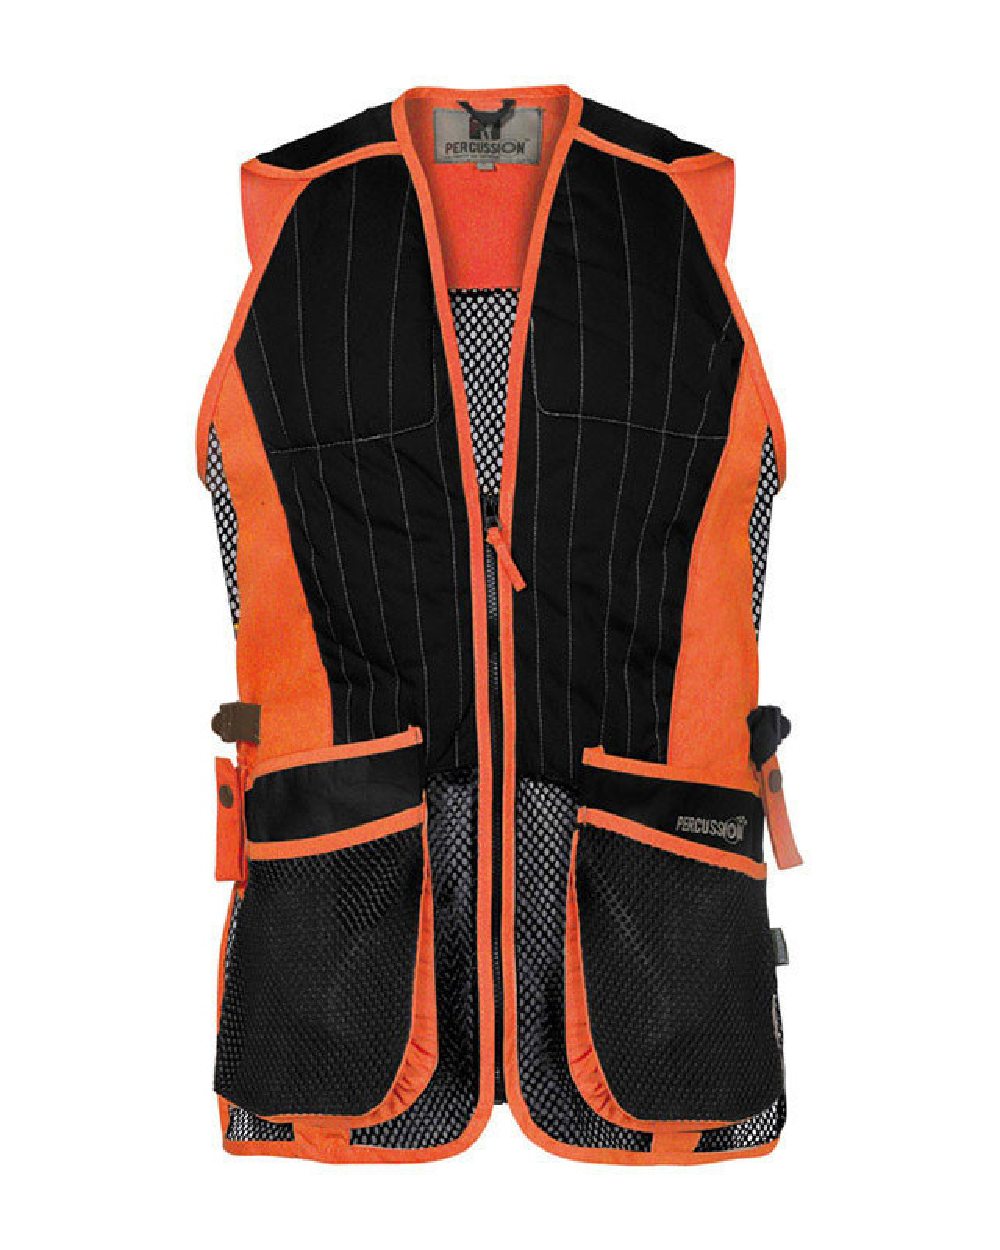 Percussion Skeet Vest in Black/Orange 